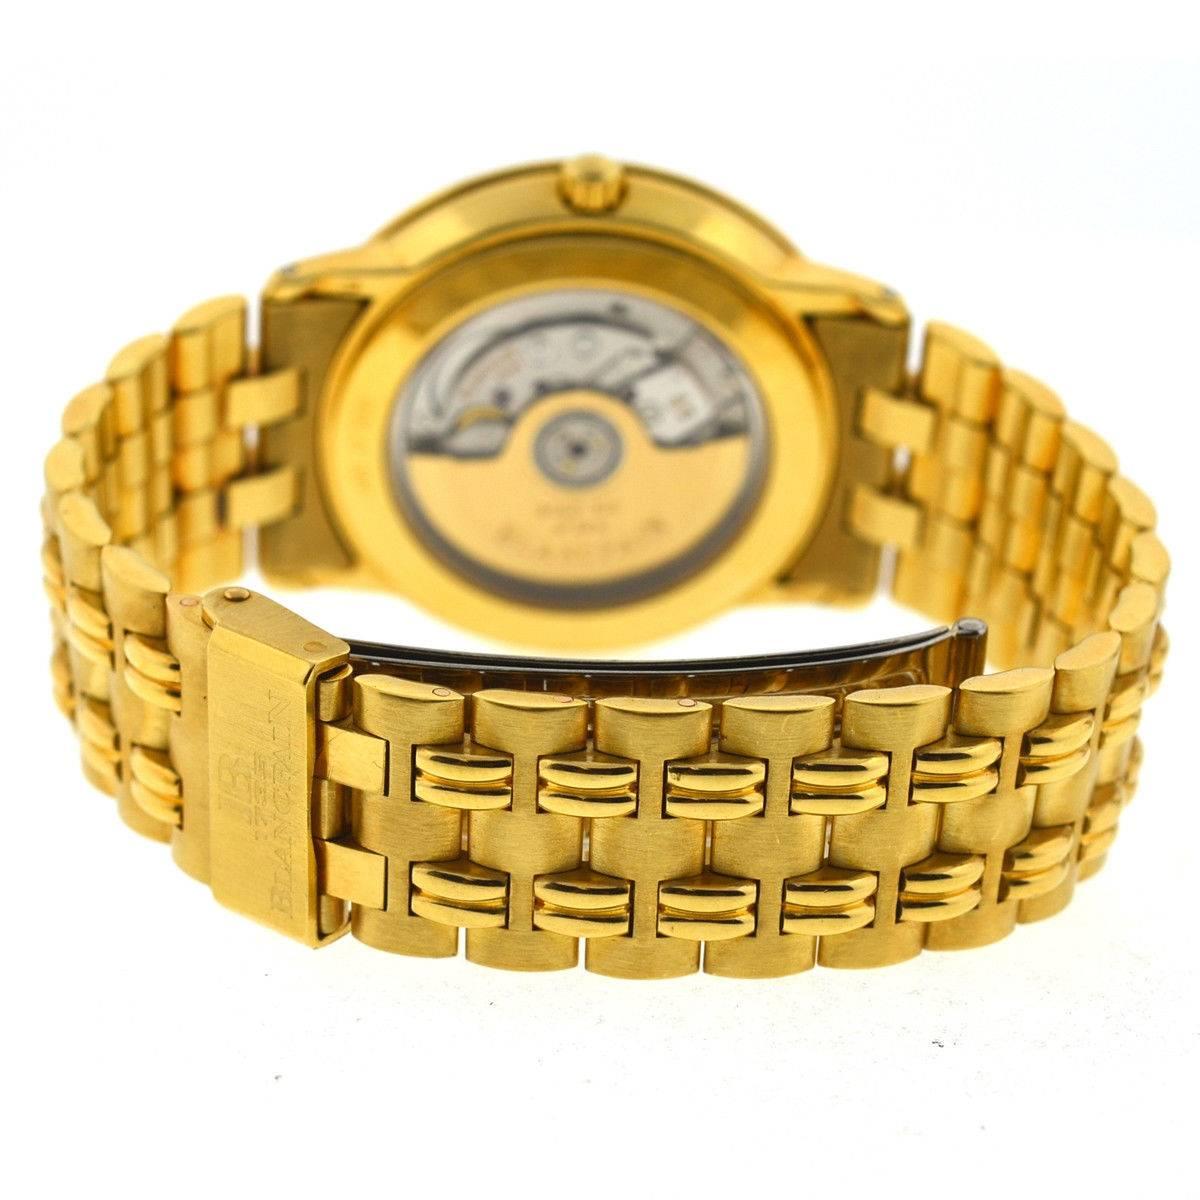 Blancpain Villeret 4795 Automatic Watch 18 Karat Yellow Gold 2